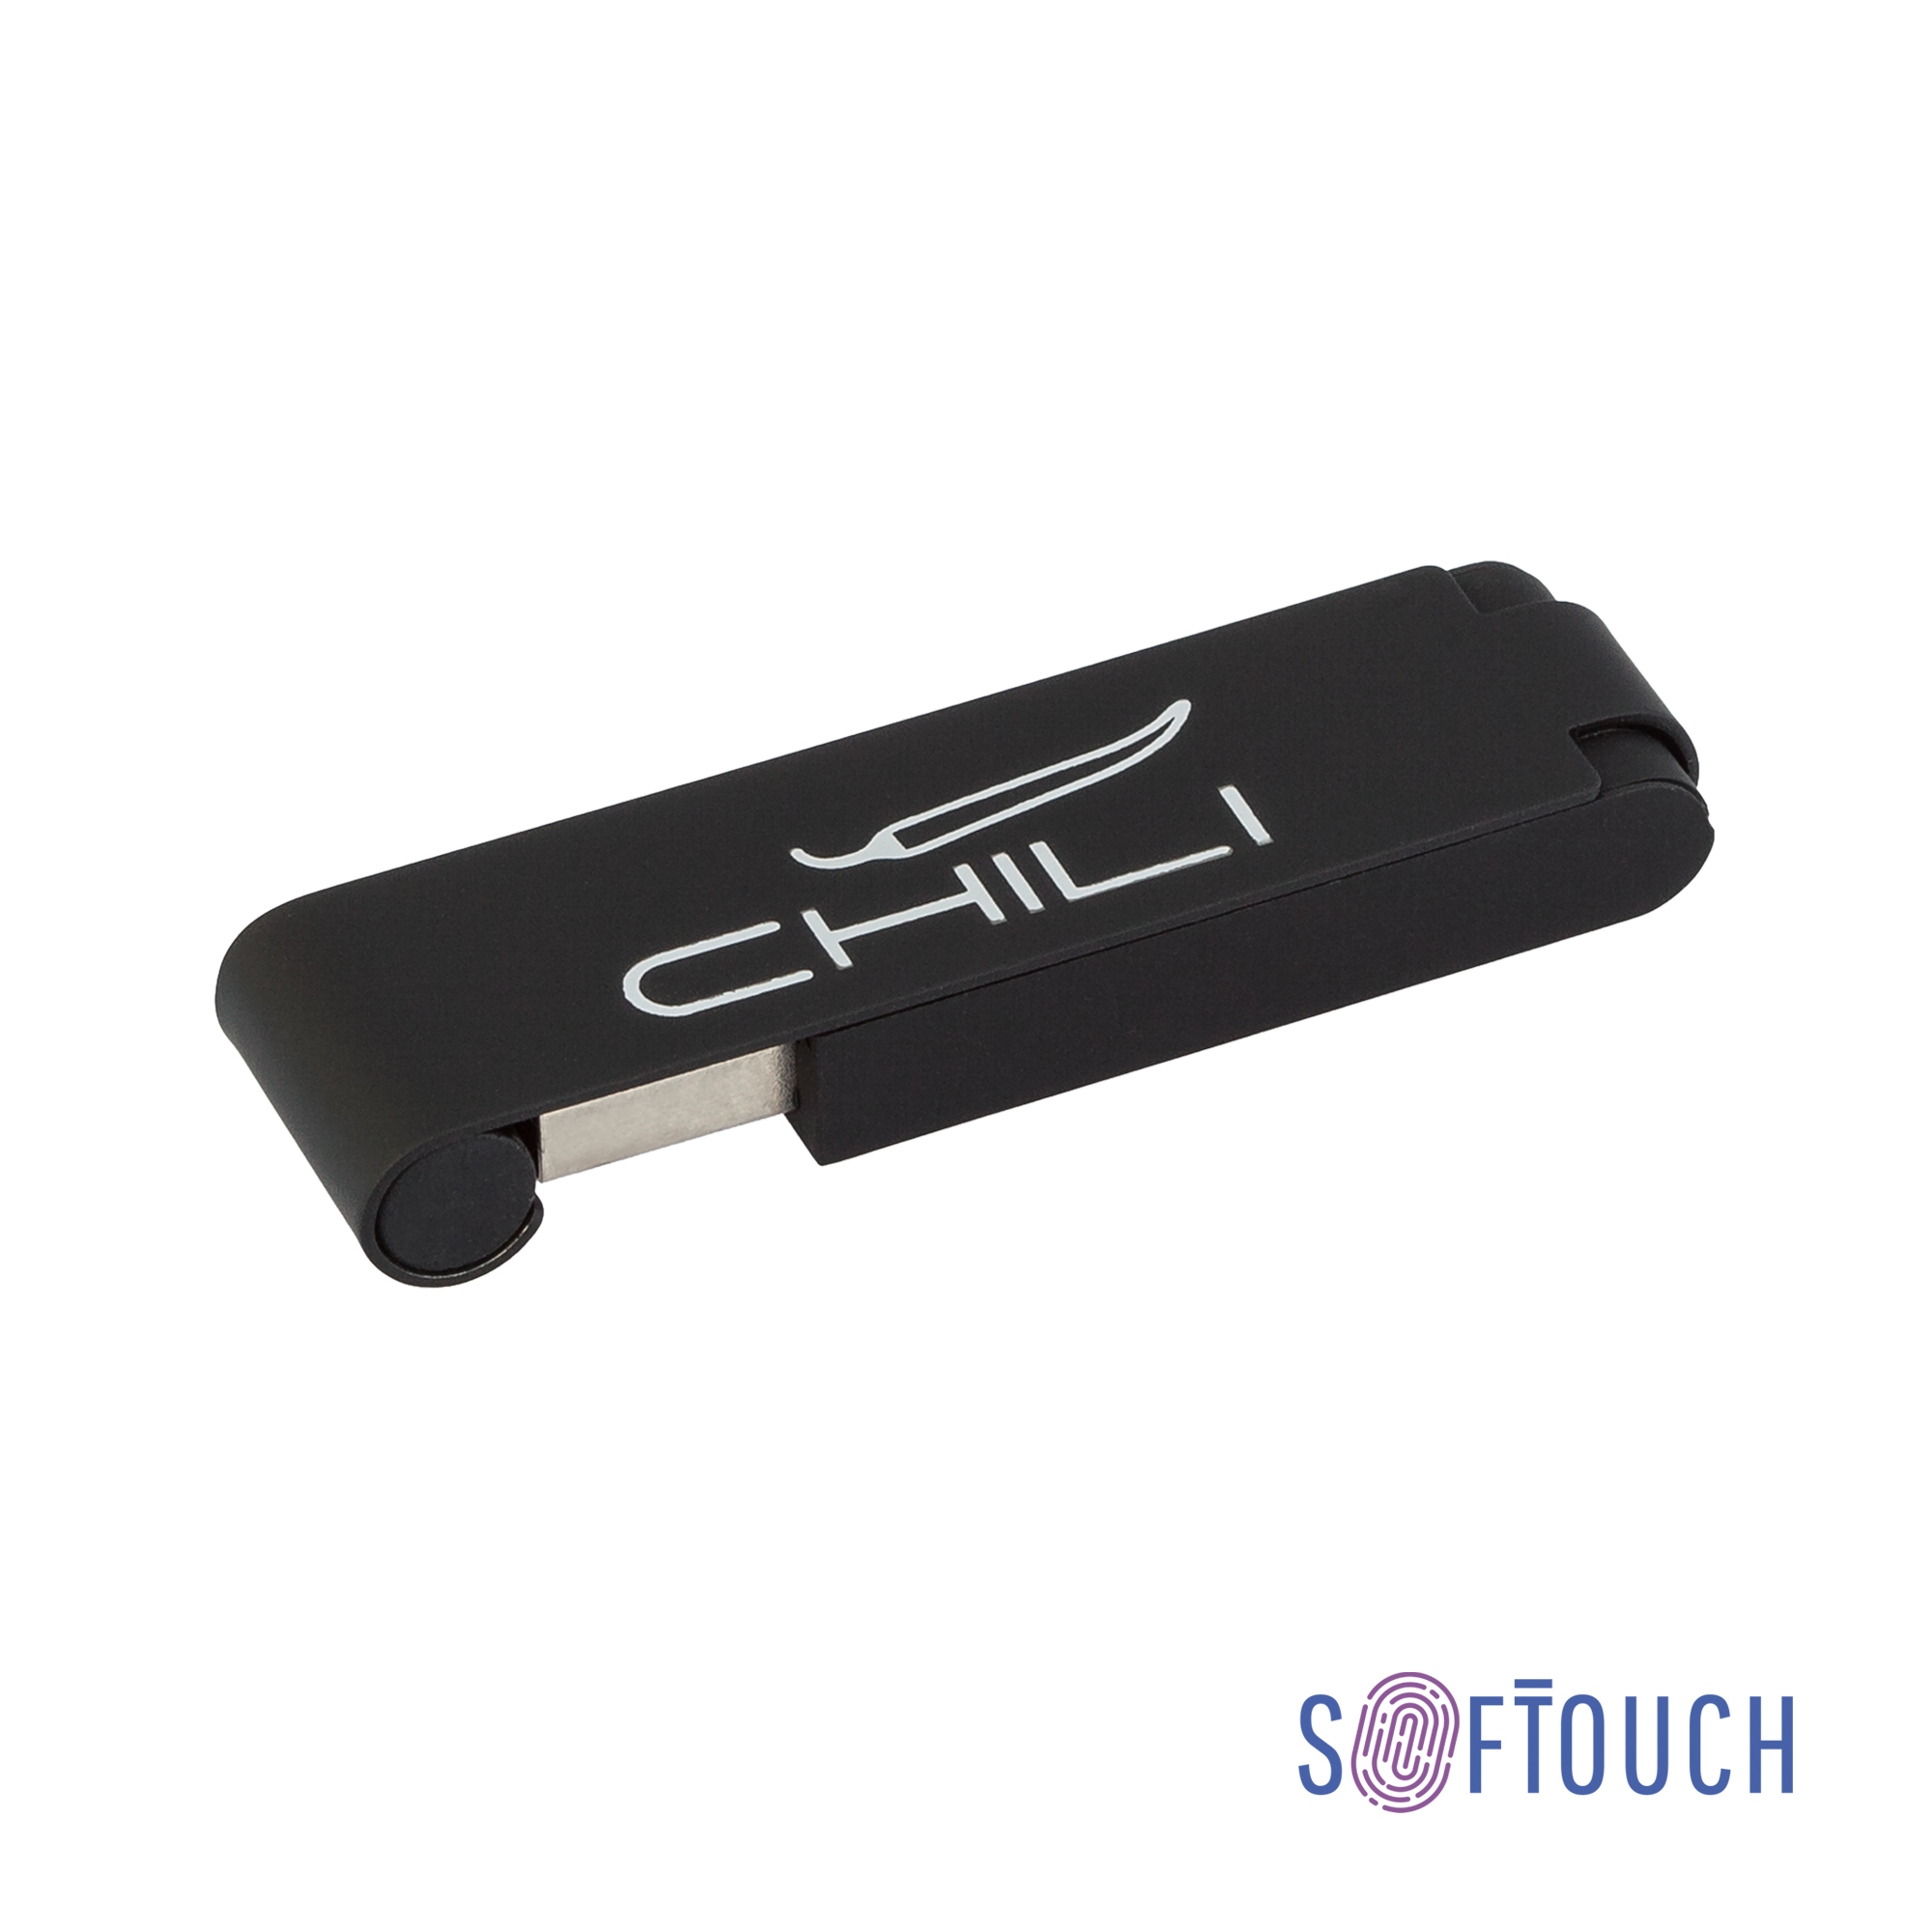 Флеш-карта "Case" 8GB, покрытие soft touch черный